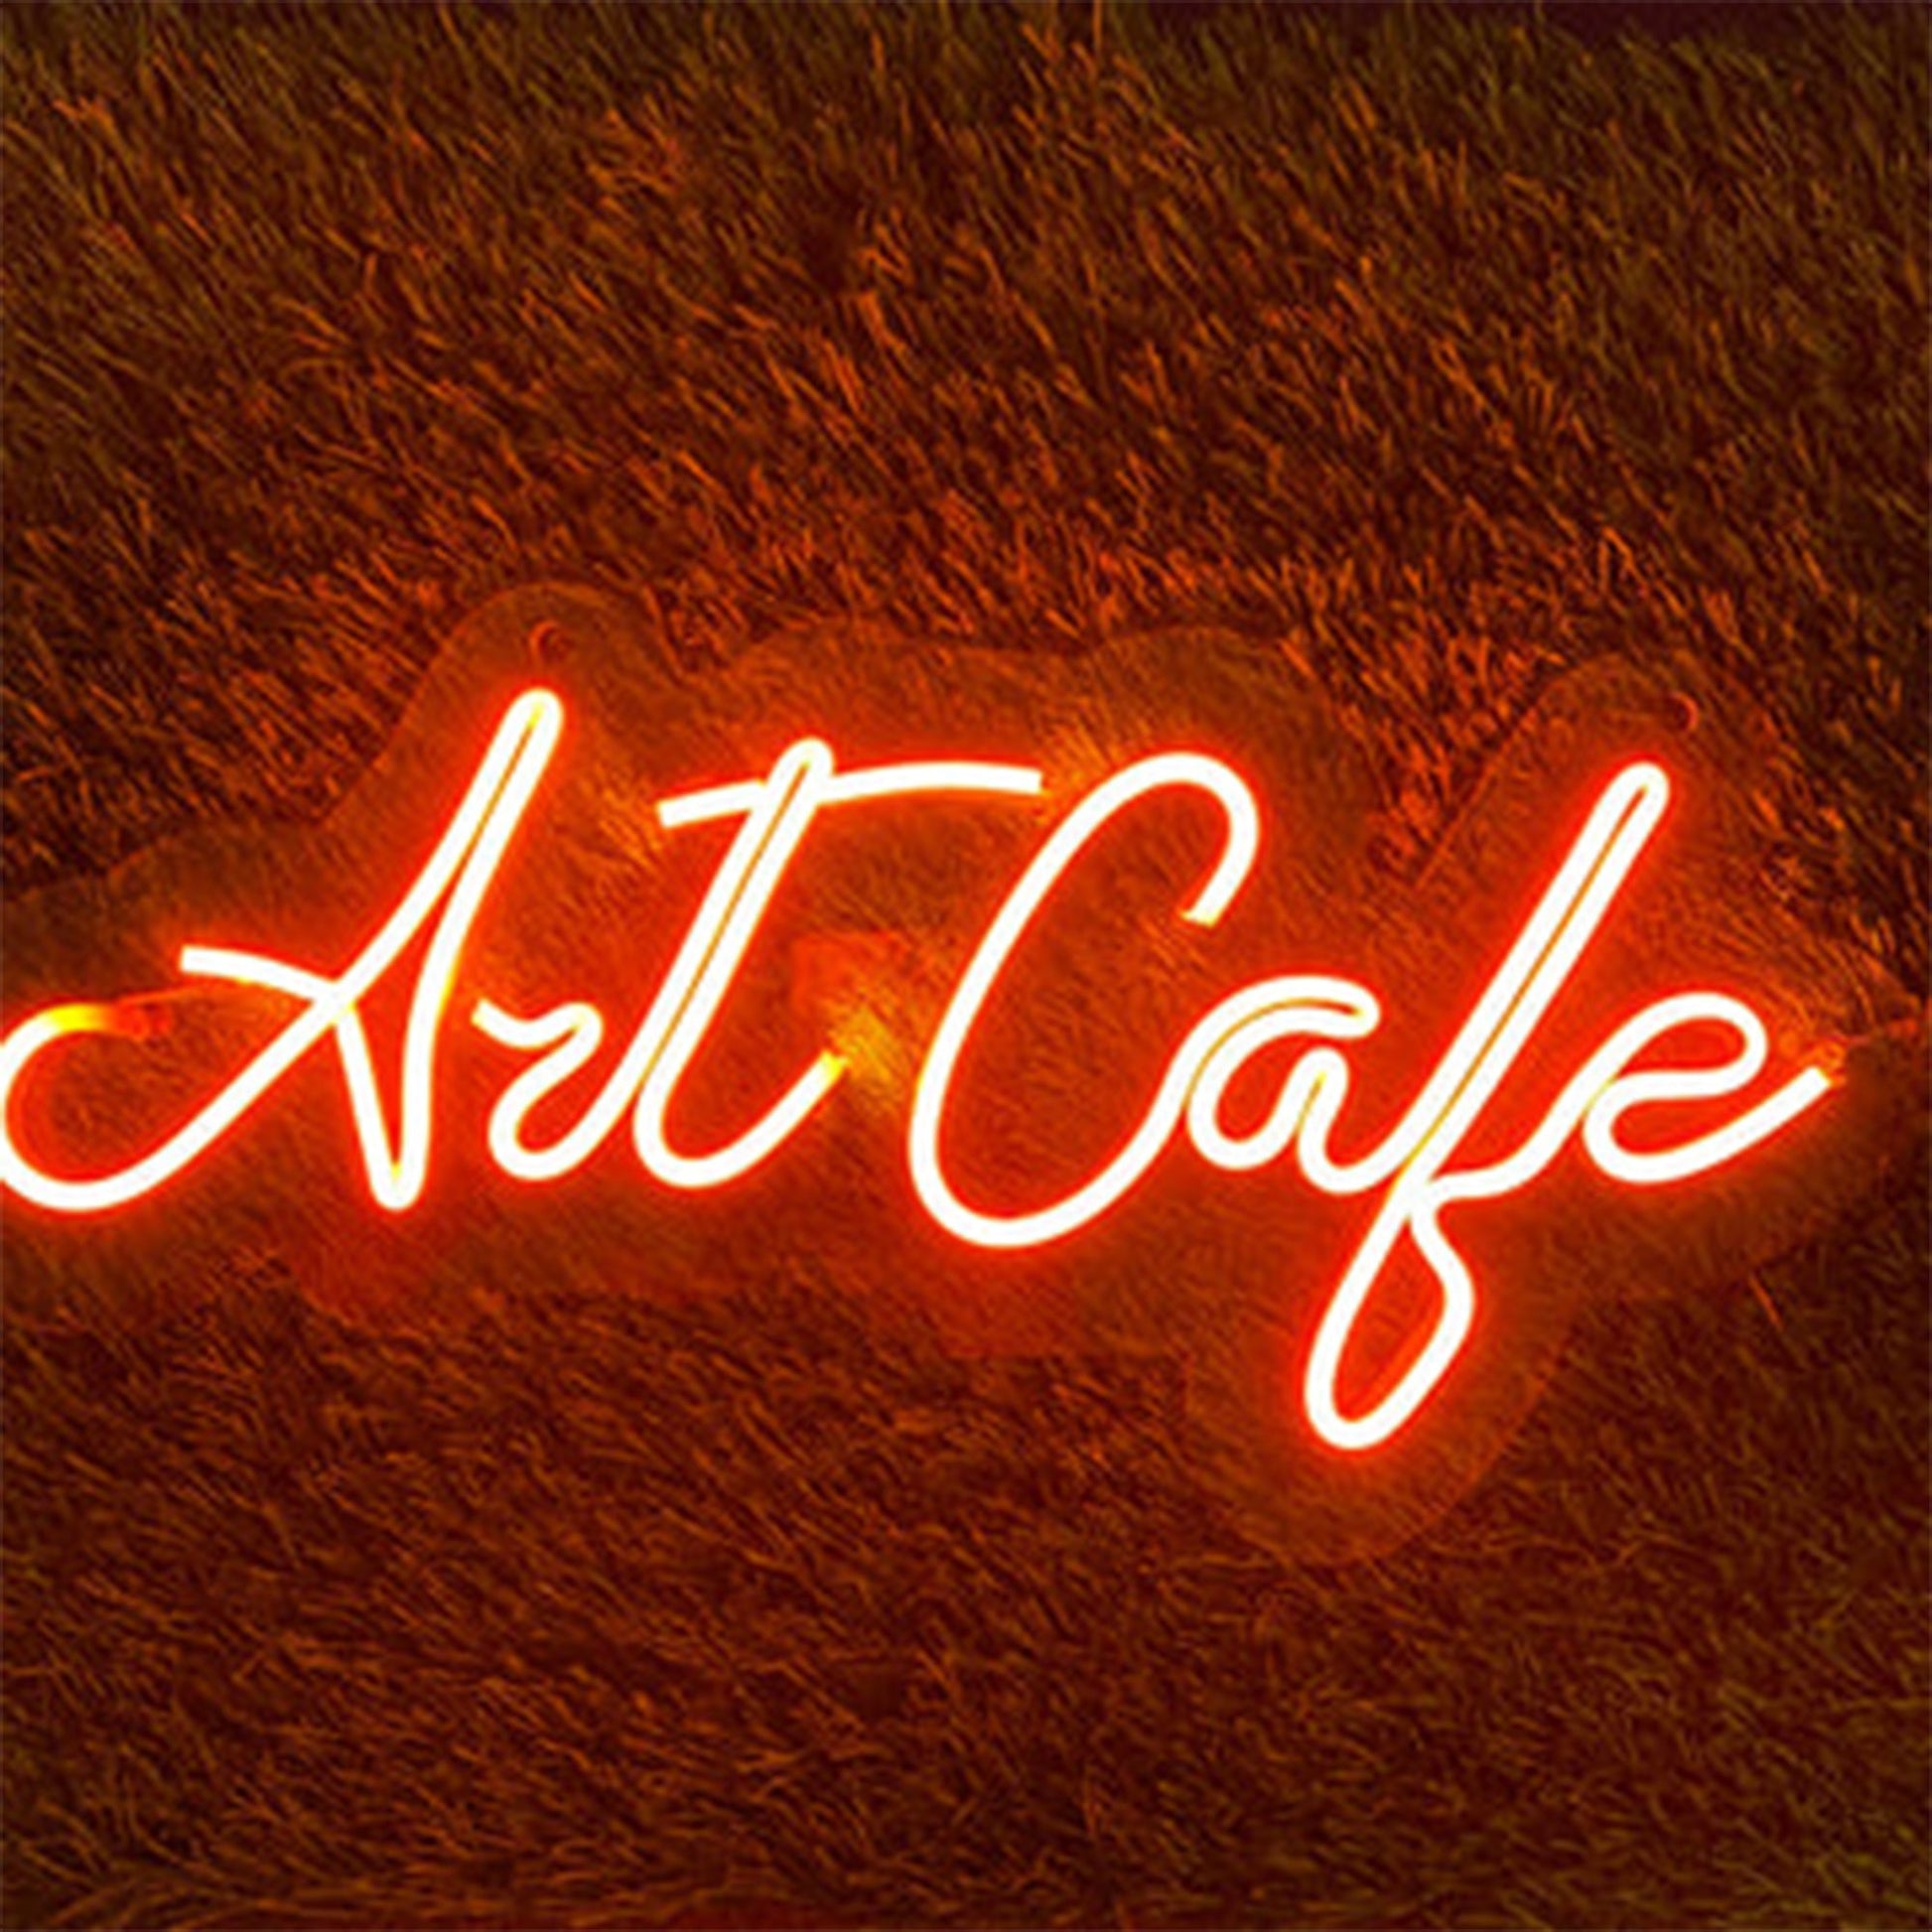 Art Café Neon Sign